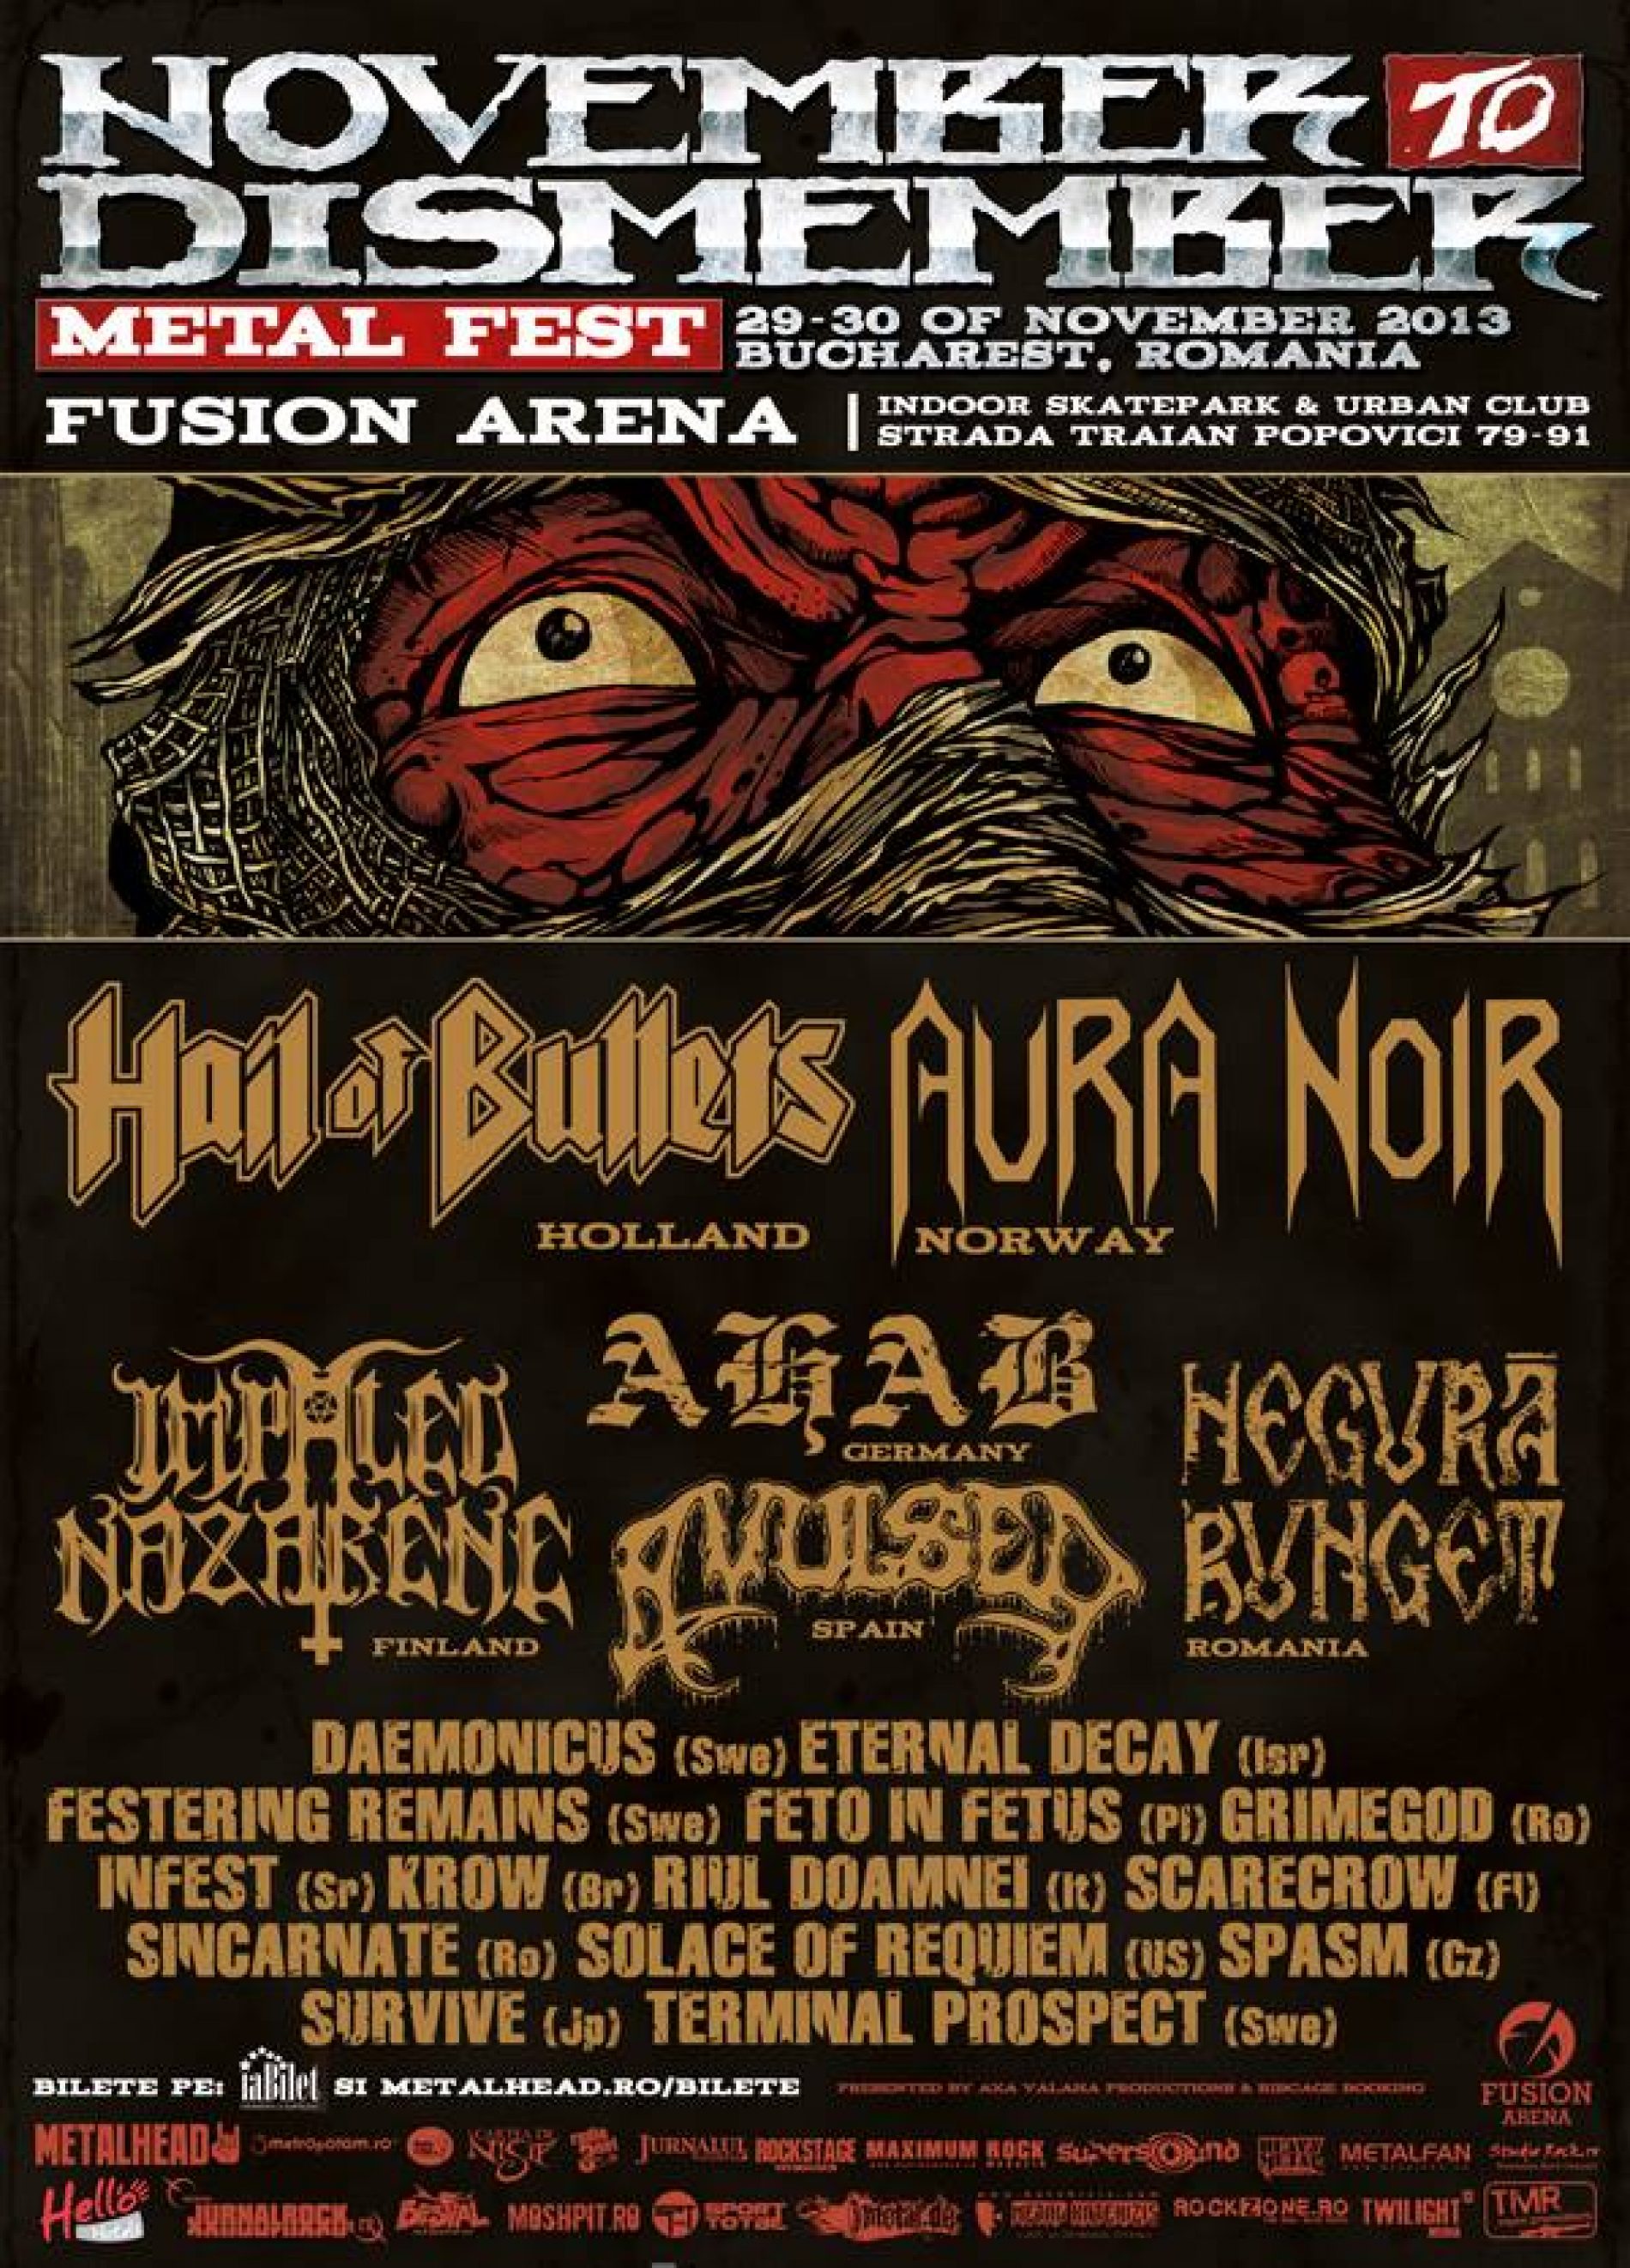 November To Dismember Metal Fest, la Fusion Arena